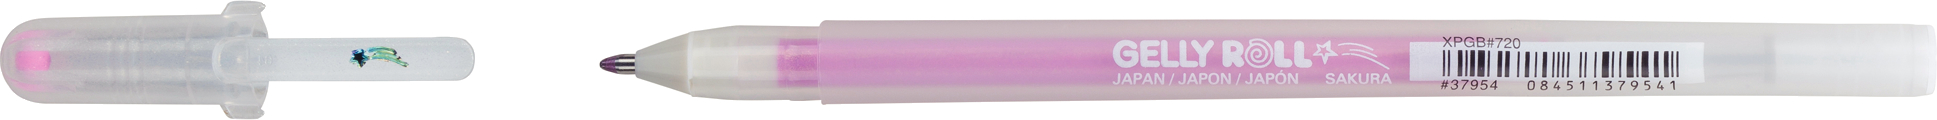 SAKURA Gelly Roll 0.5mm XPGB720 Stardust pink Glitter Stardust pink Glitter